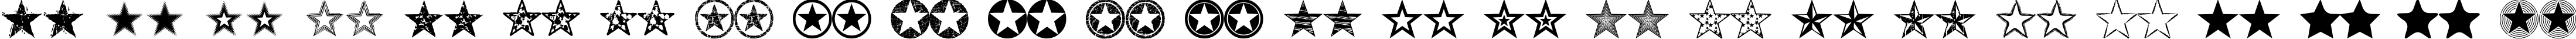 Пример написания английского алфавита шрифтом Seeing Stars